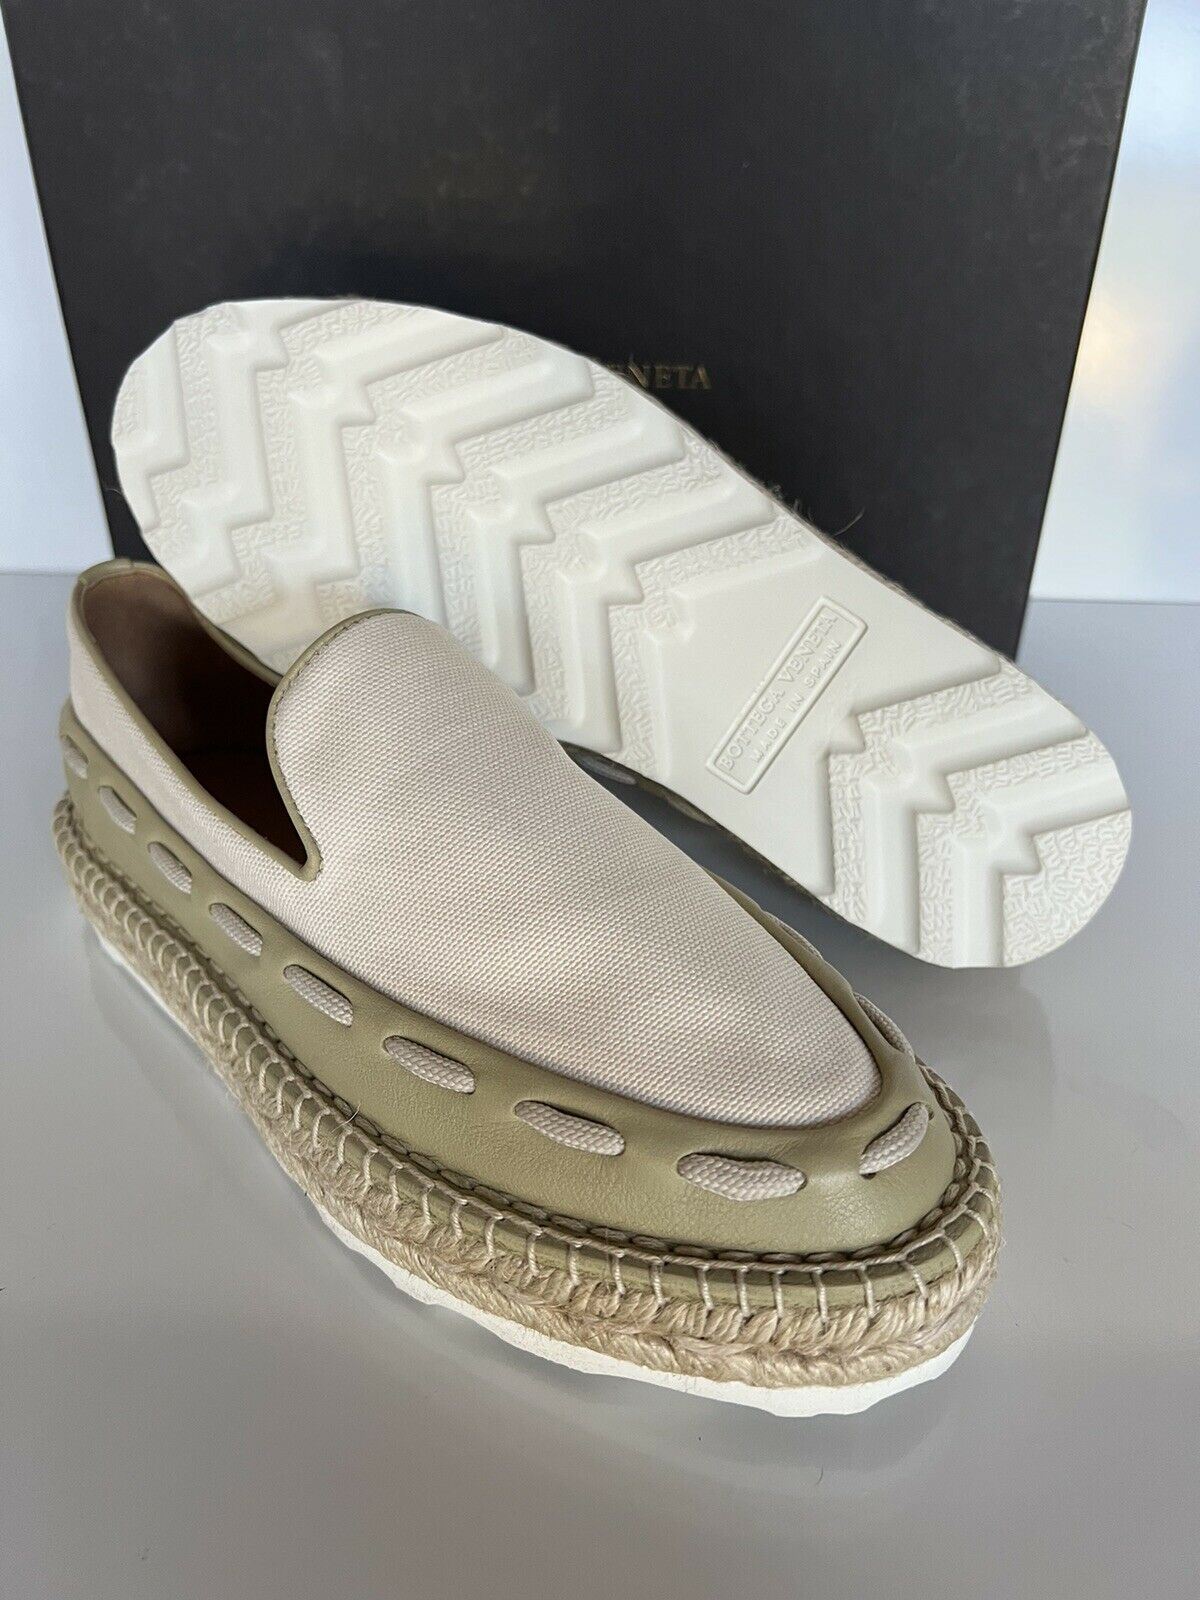 NIB $620 Bottega Veneta Women's Slip-on Espadrilles Shoes 10 US (40 Euro) 578386